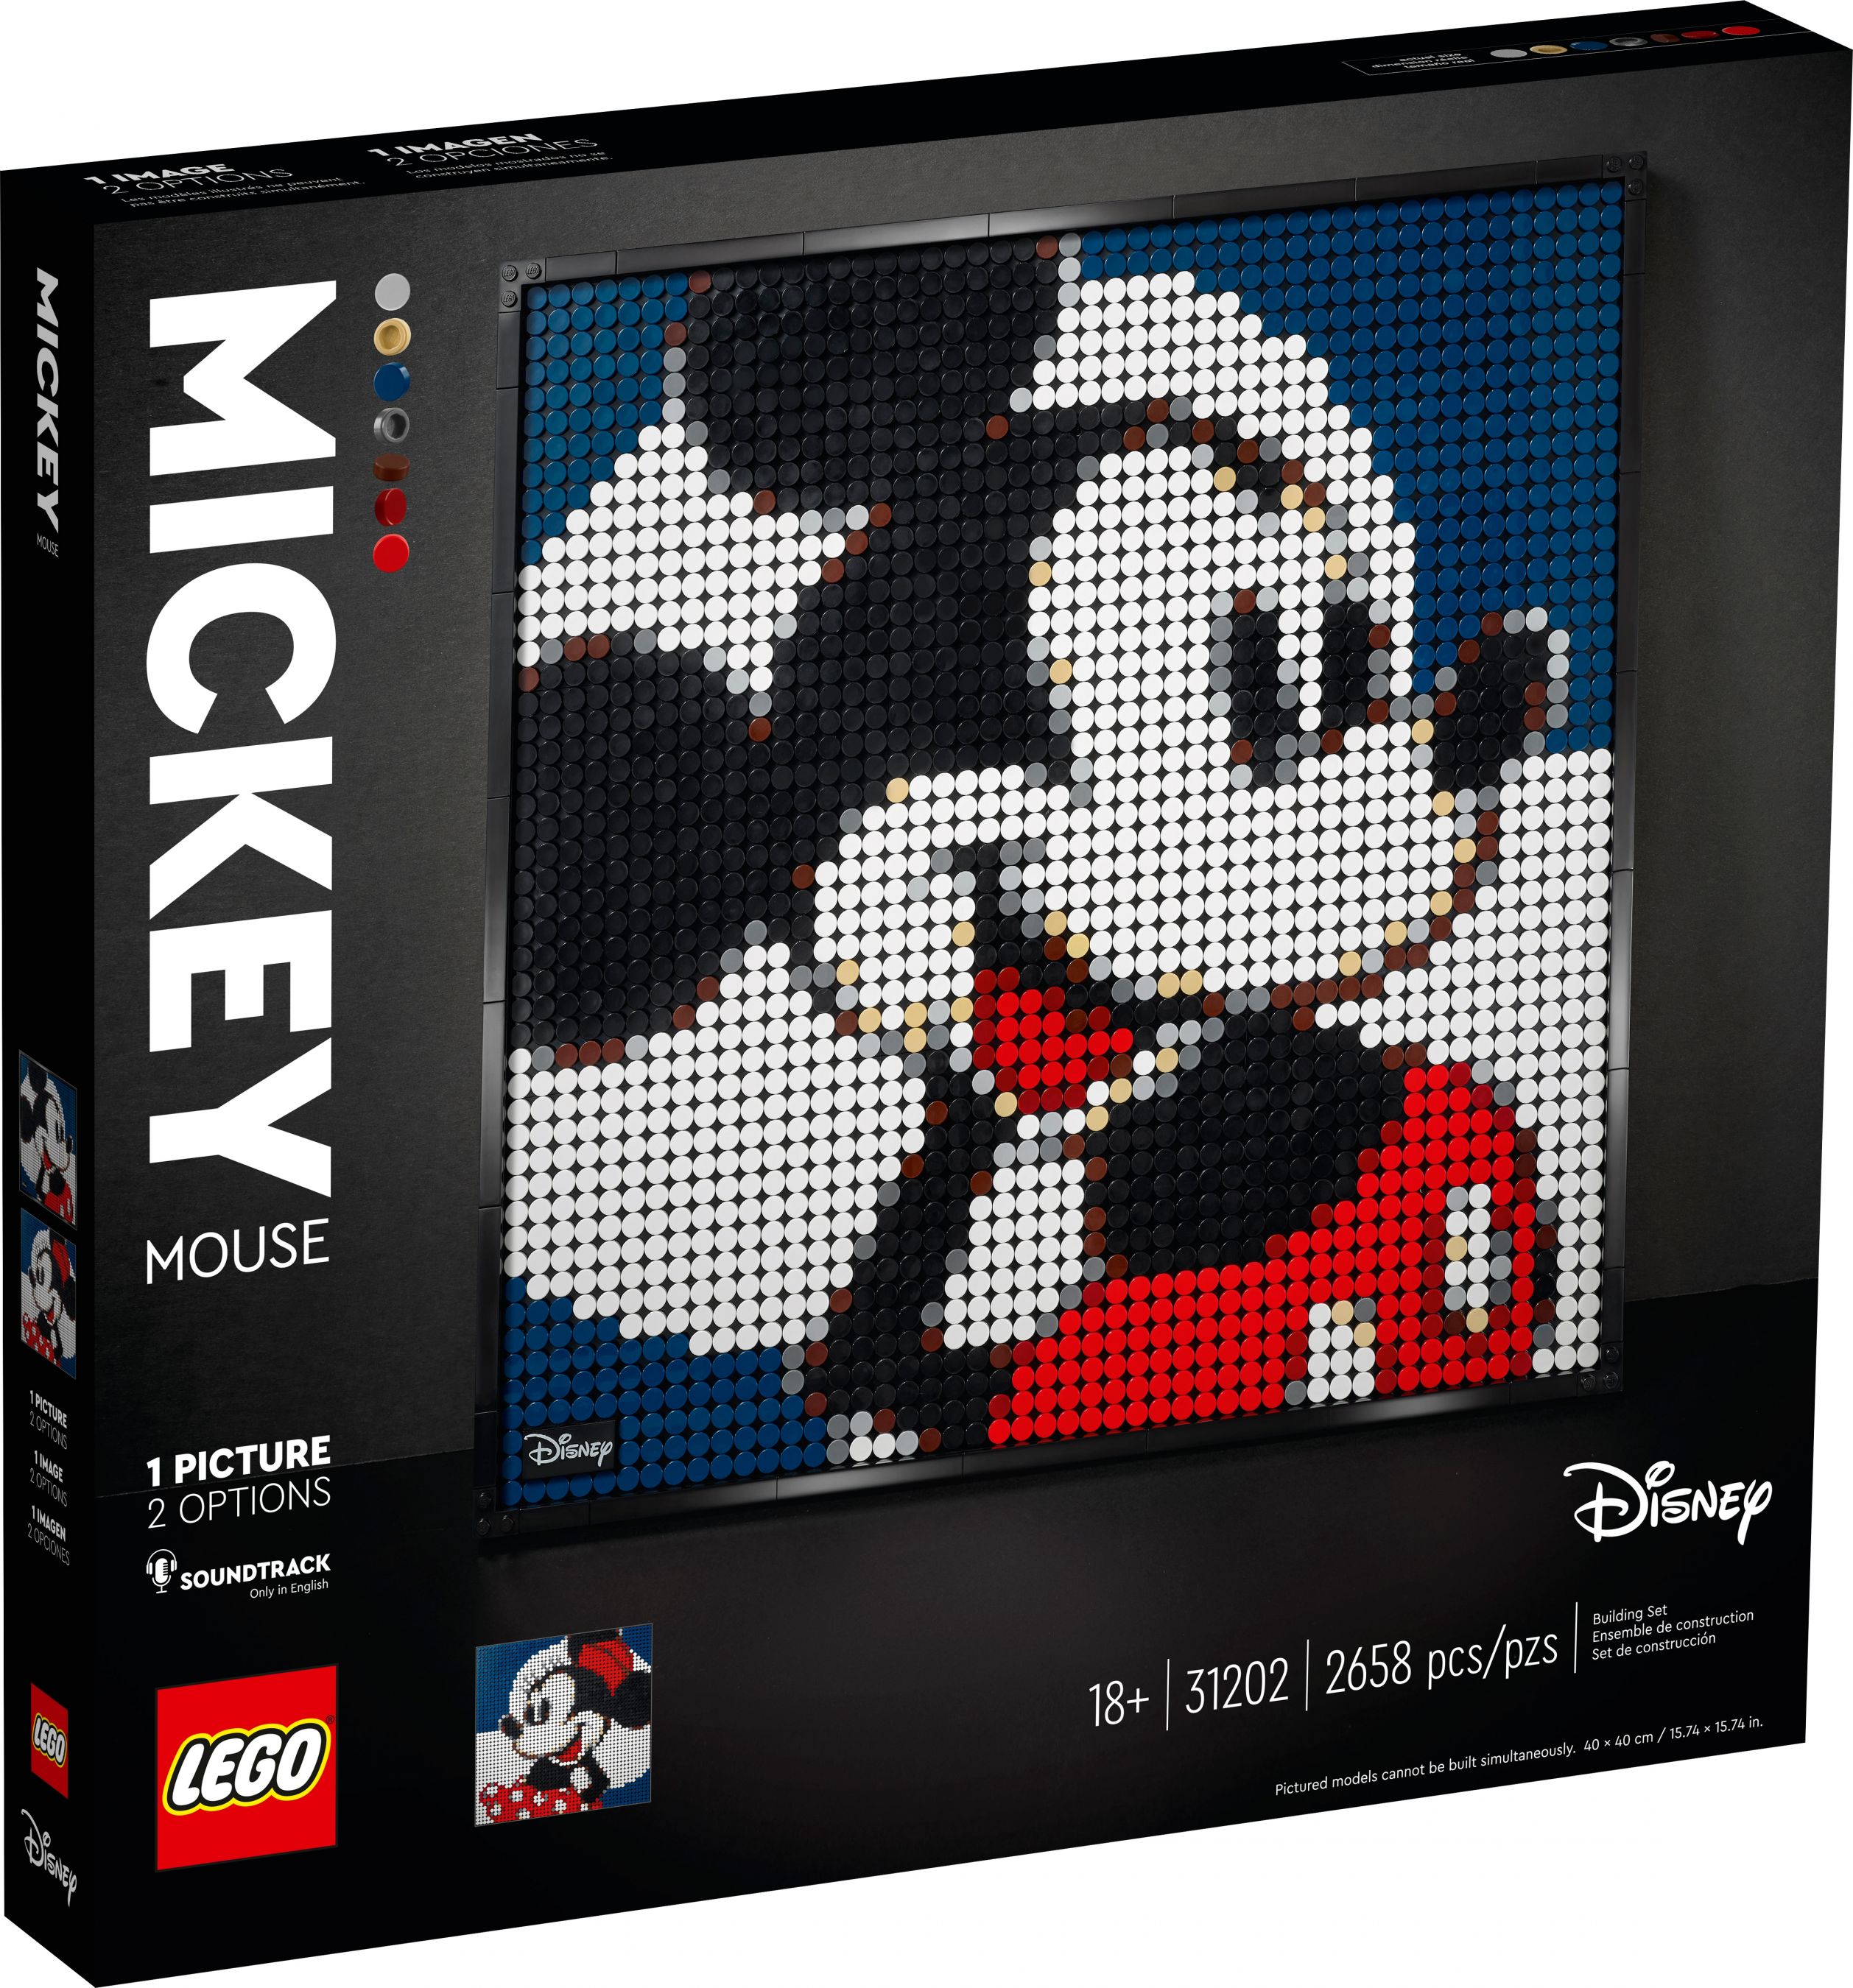 LEGO Art 31202 Disney's Mickey Mouse LEGO_31202_alt1.jpg